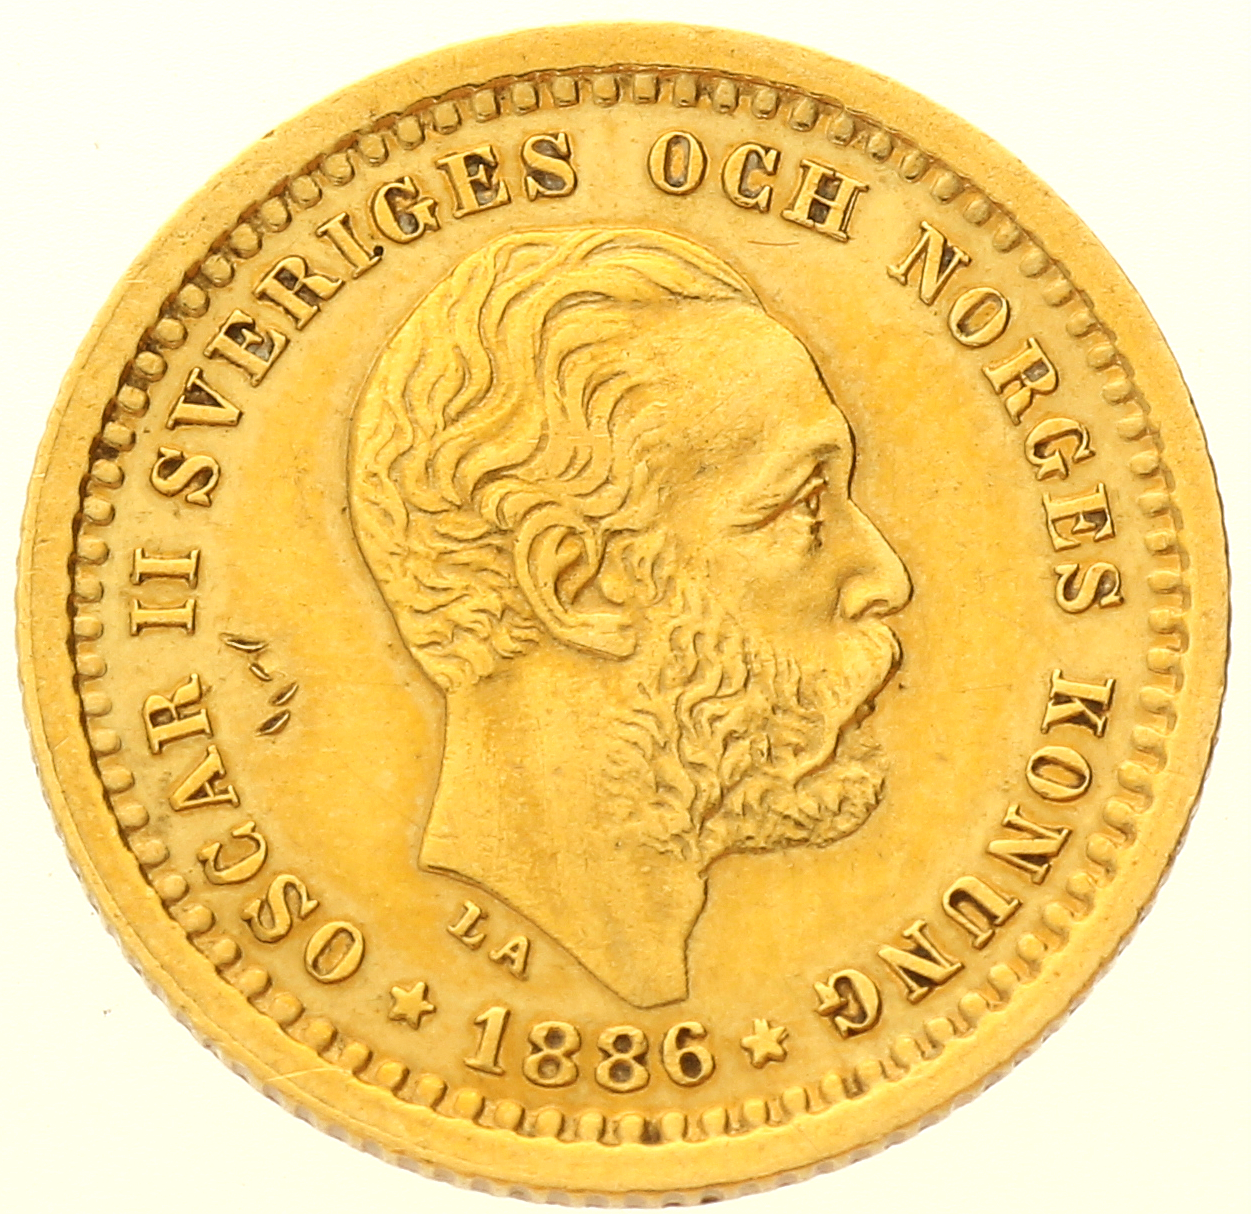 Sweden - 5 kronor - 1886 - Oscar II 